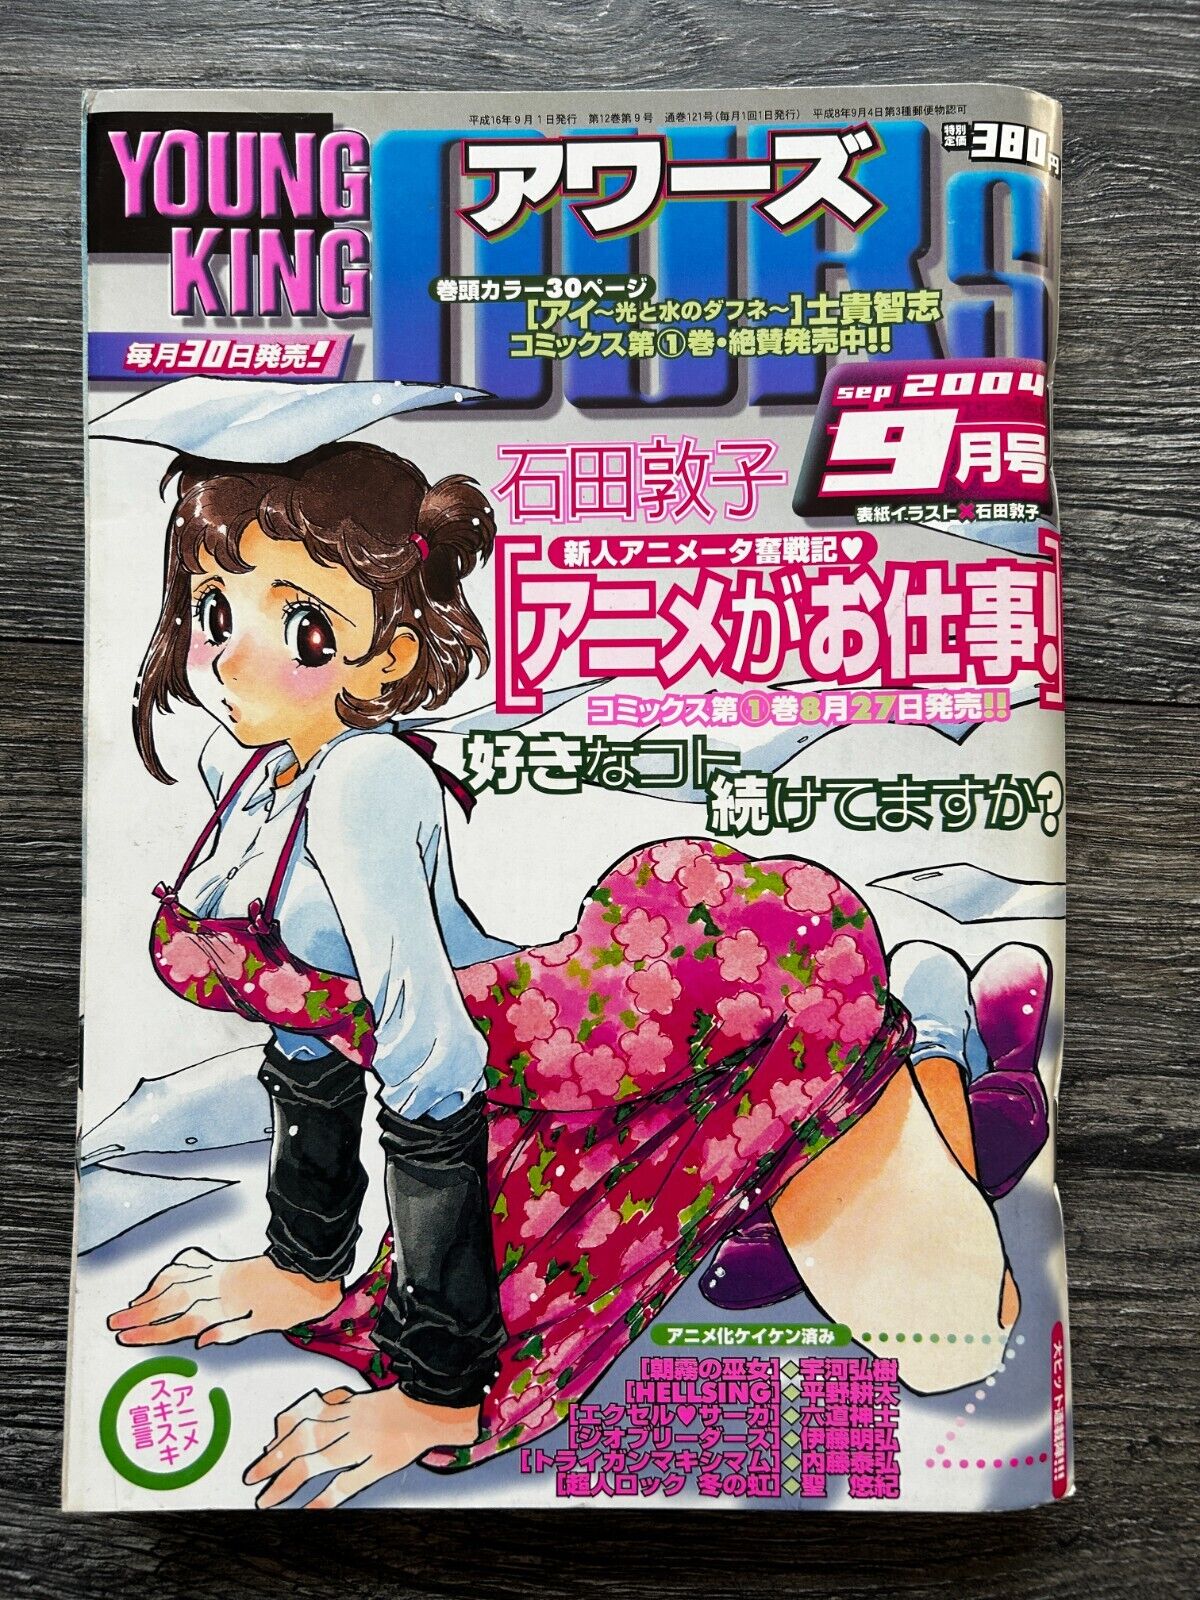 YOUNG KING OURS Manga Anime Comic Magazine September 2004 Japan Japanese